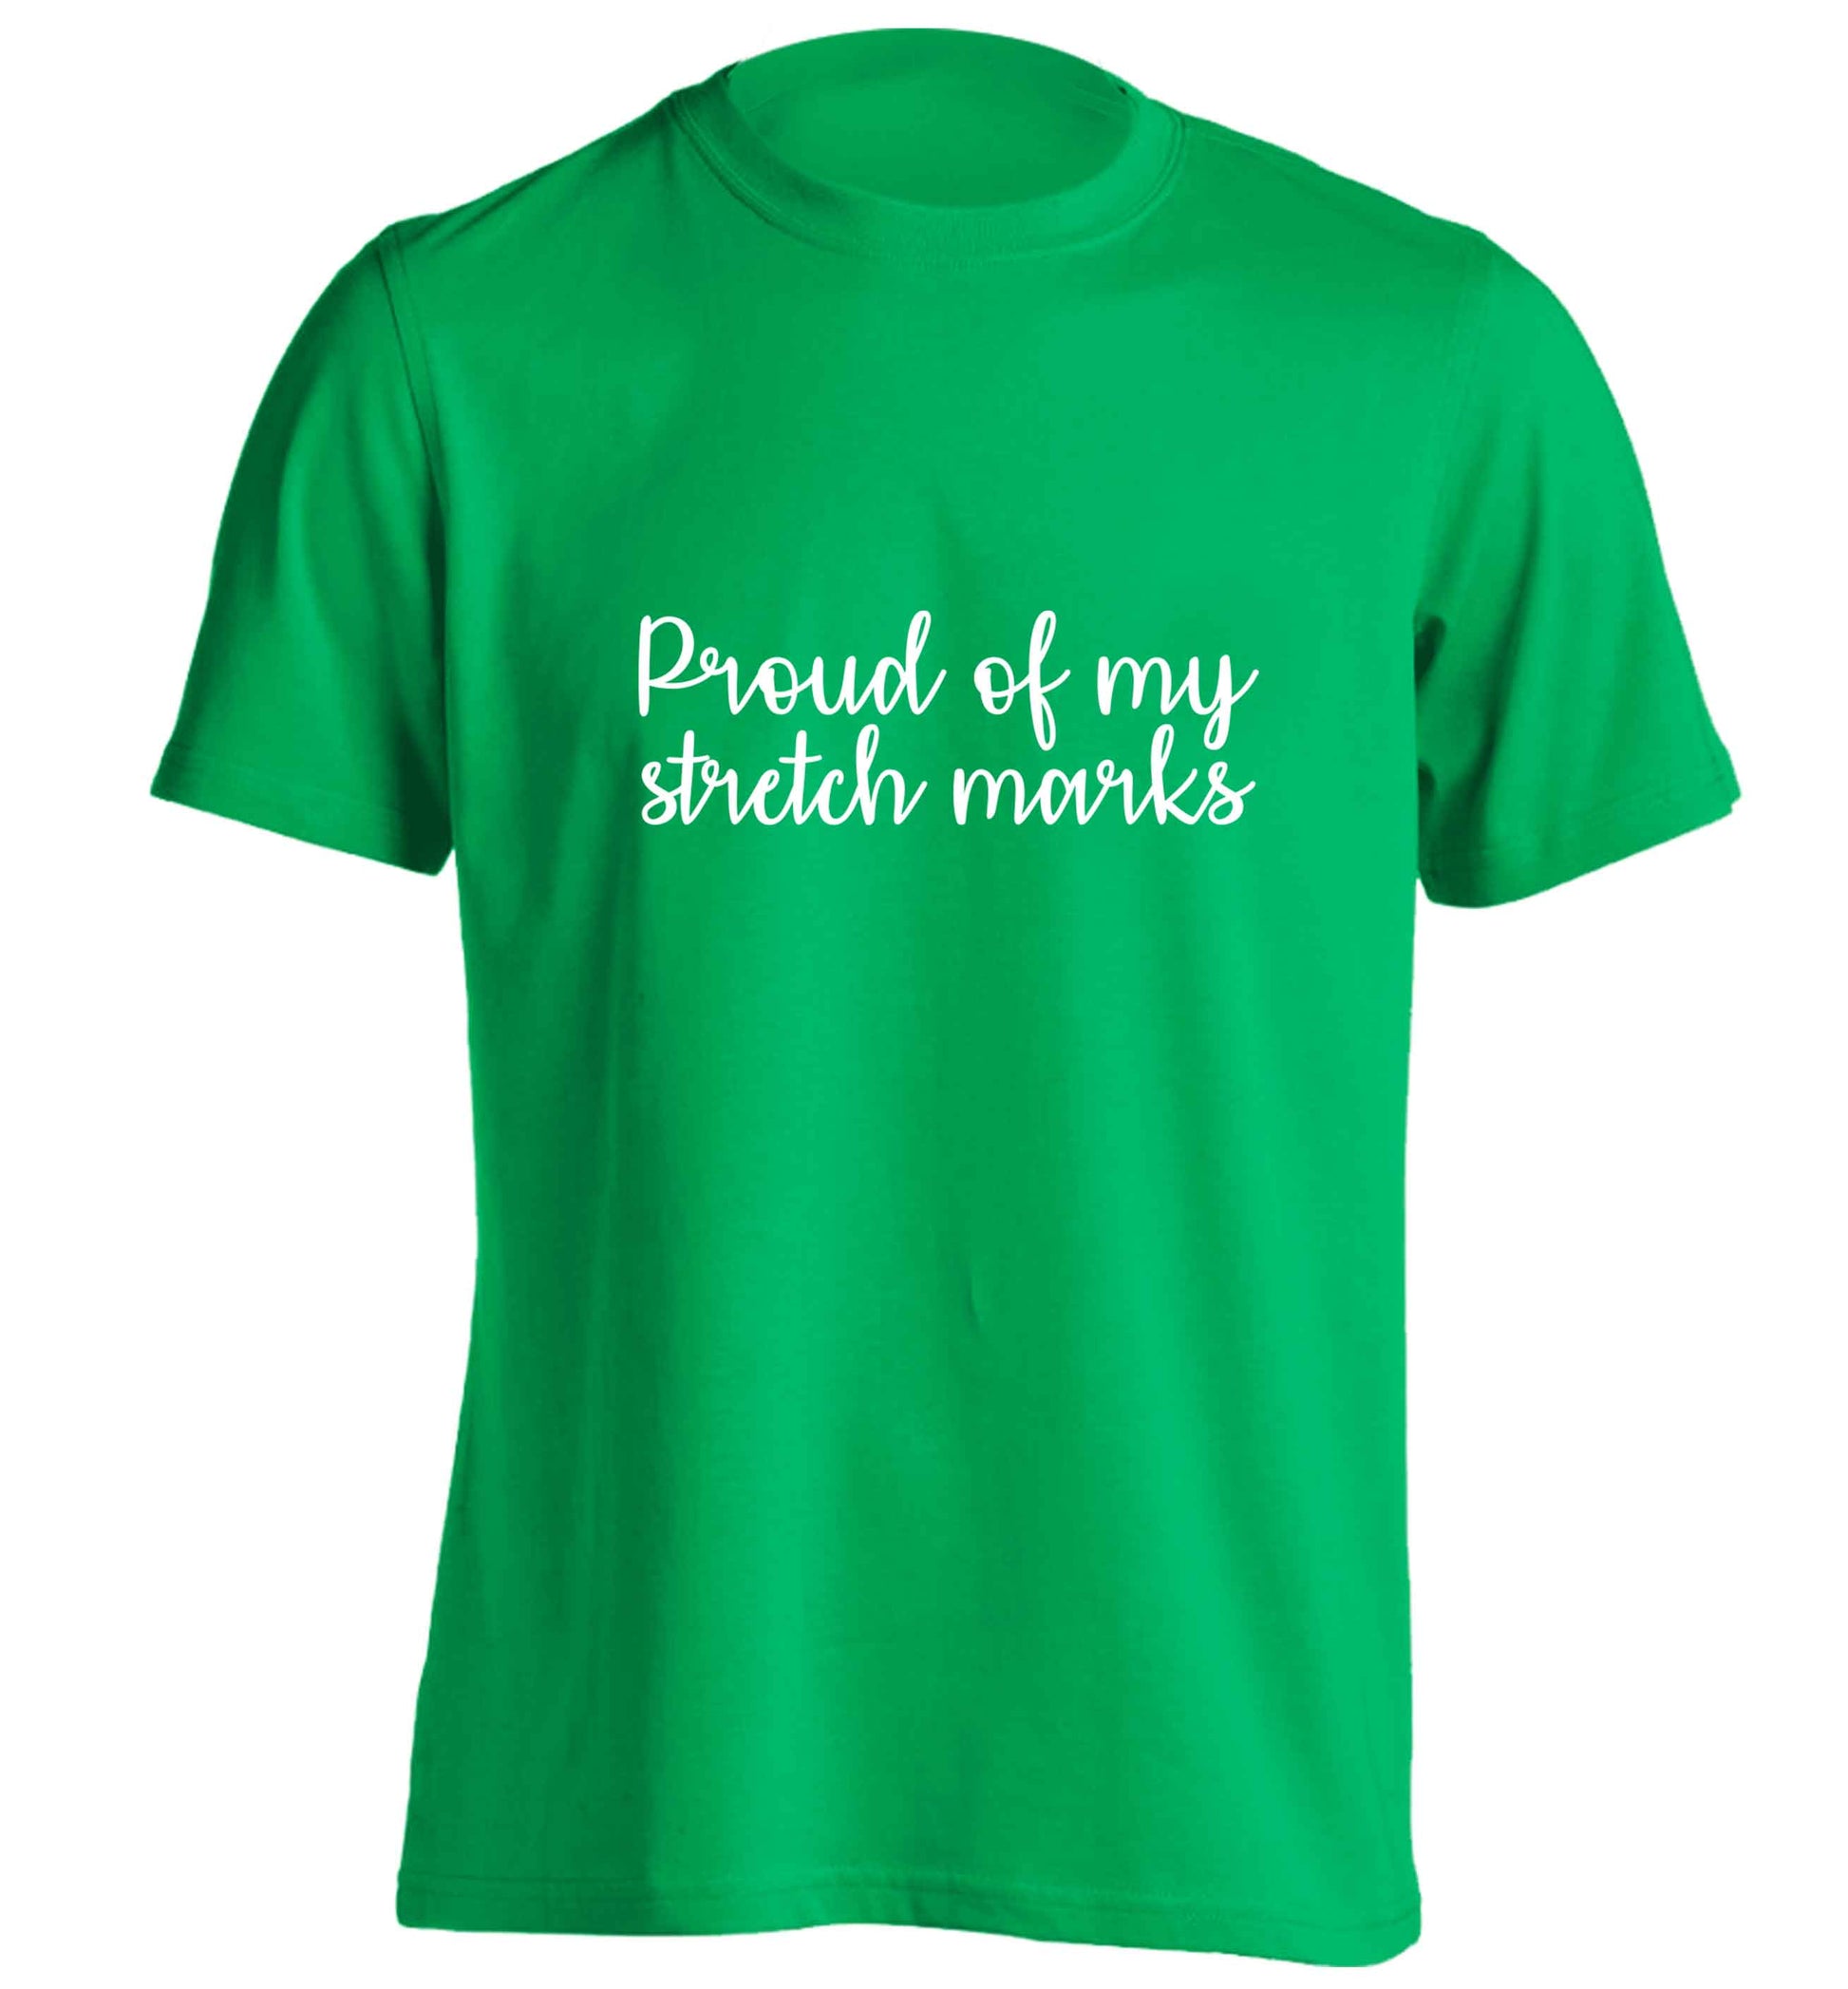 Proud of my stretch marks adults unisex green Tshirt 2XL